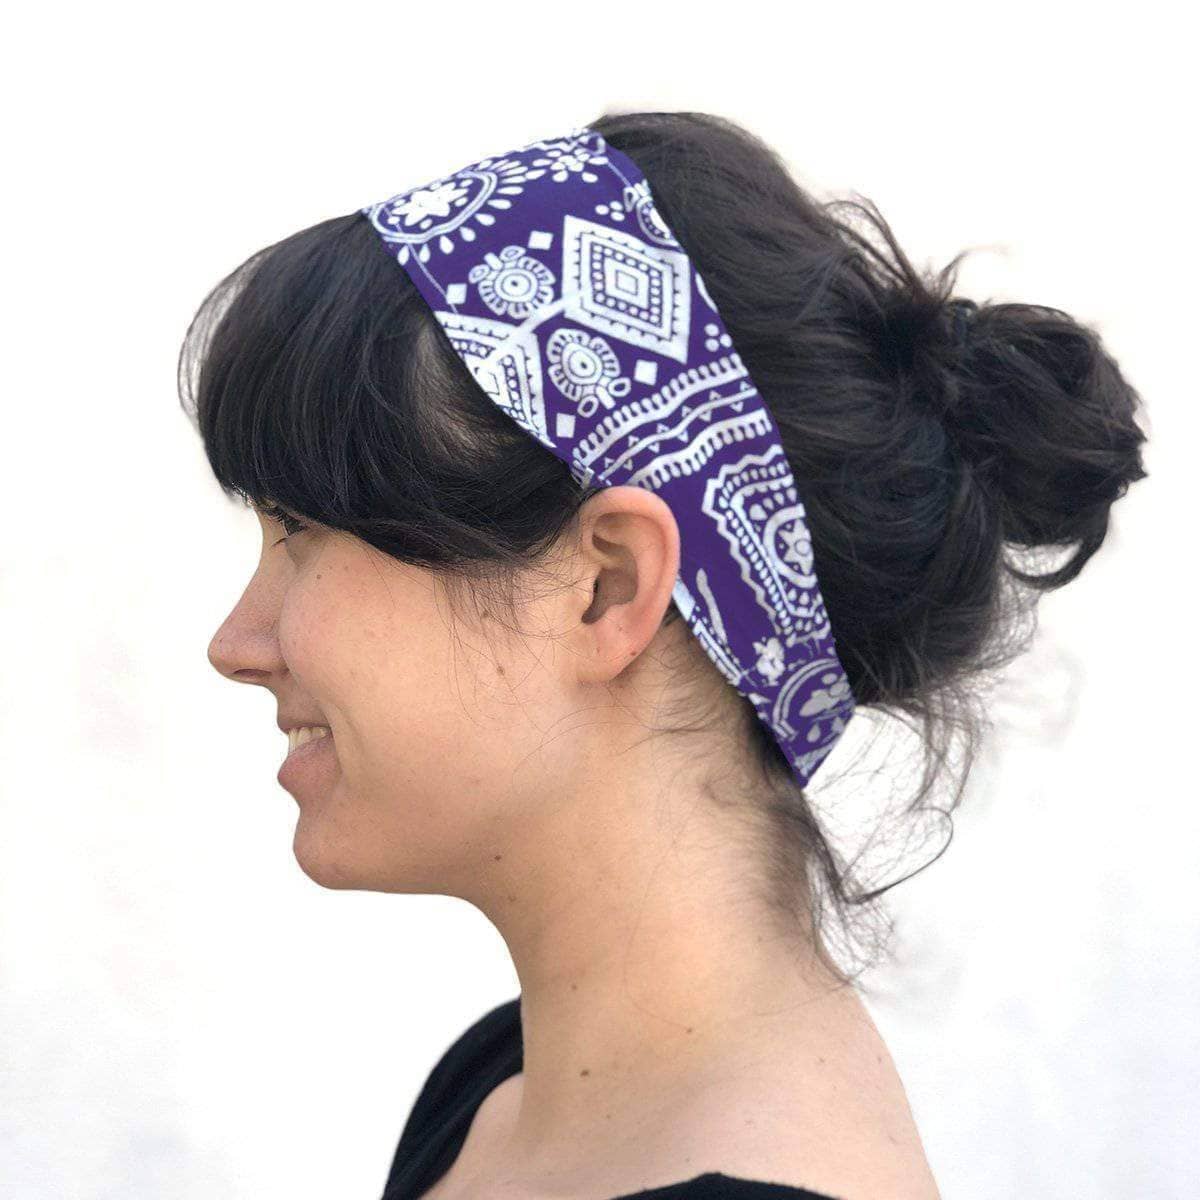 Yoga Headbands - and How to Wear Them! – Darn Good Yarn